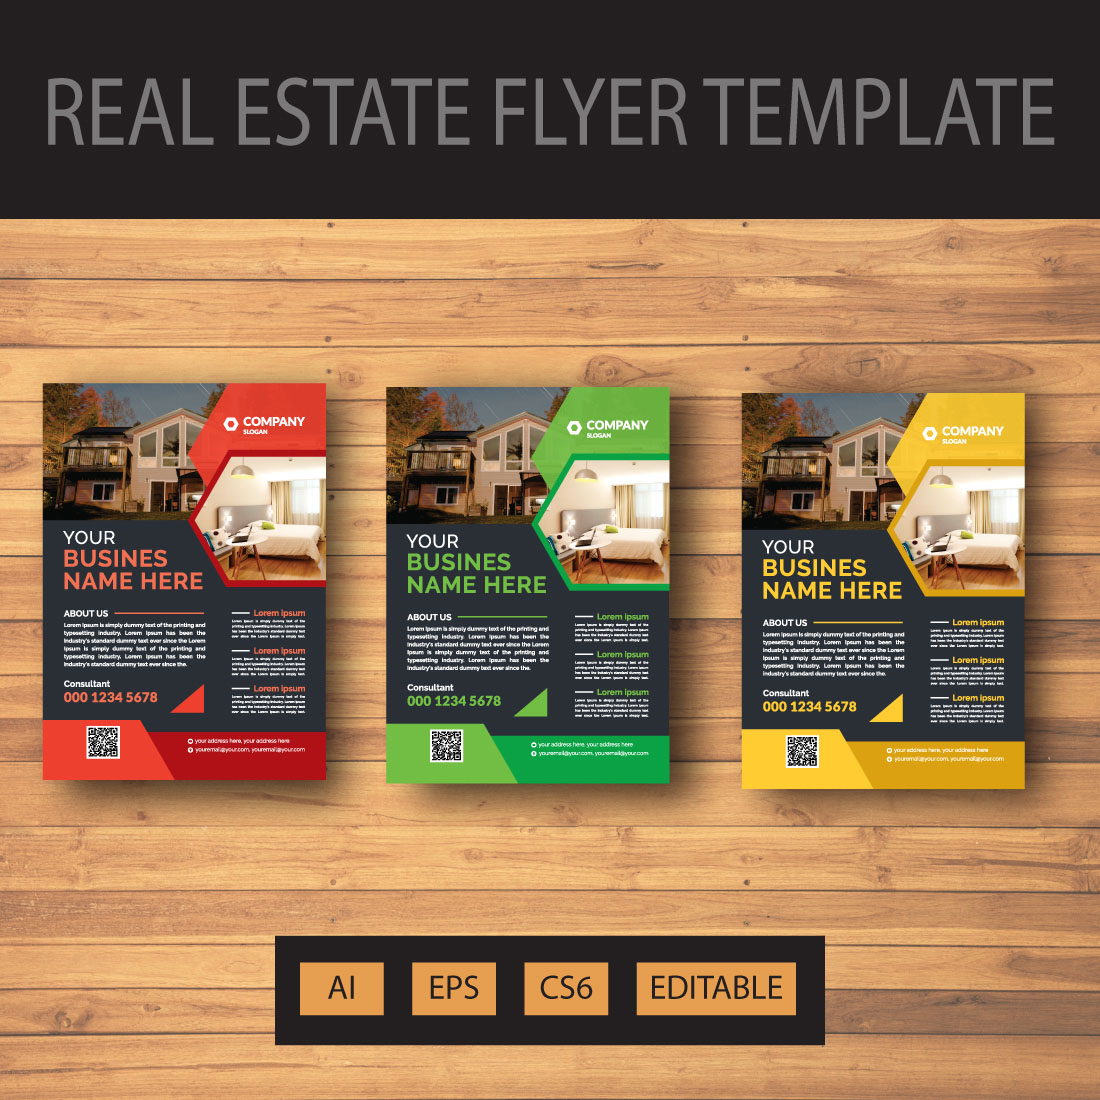 Real Estate Flyer Template Design cover image.